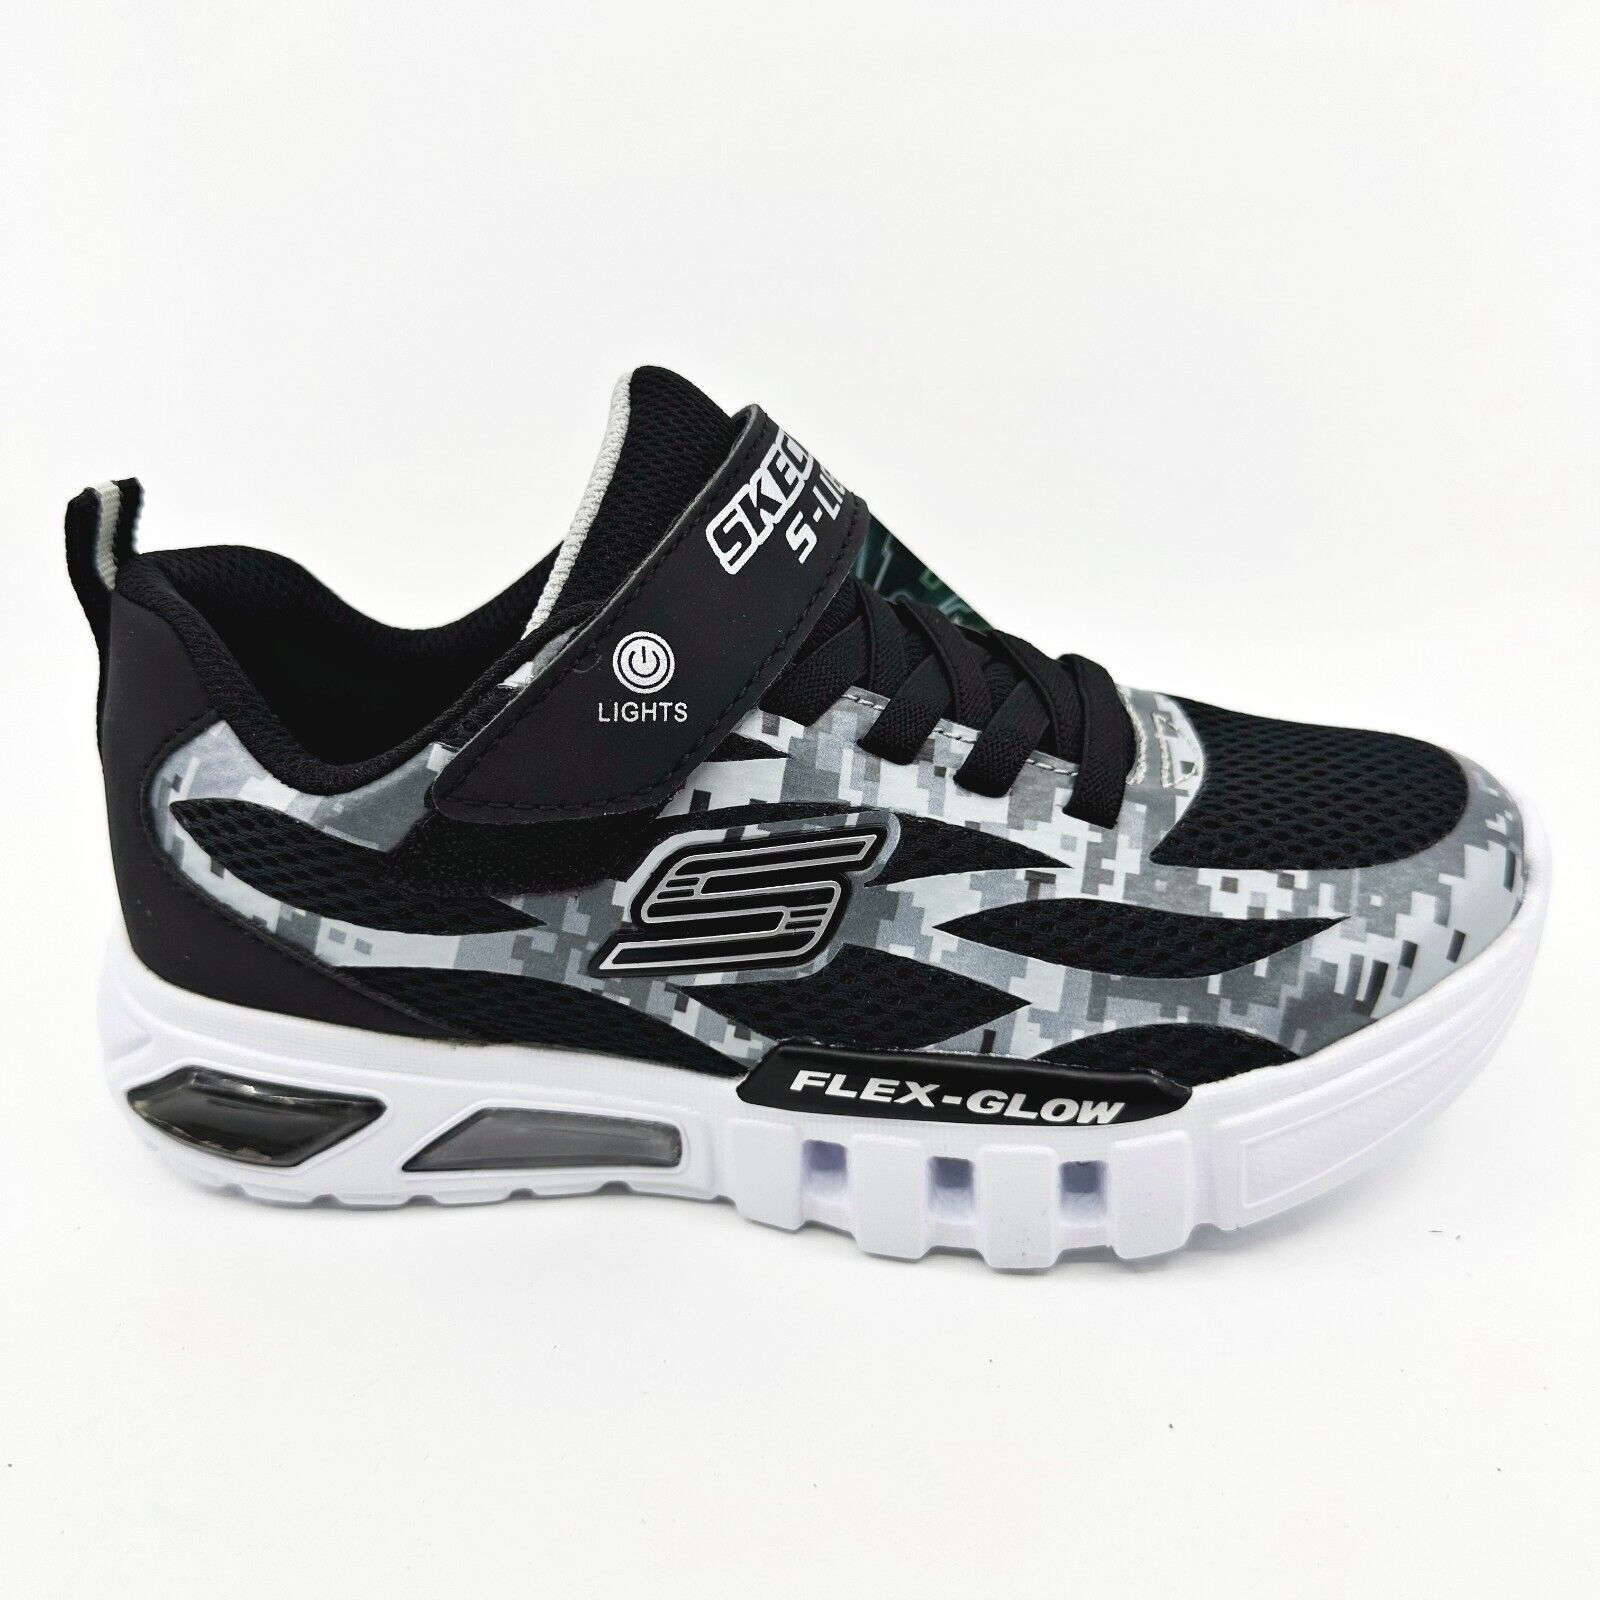 Primary image for Skechers S Lights Flex Glow Taren Black Gray Kids Boys Size 3 Sneakers